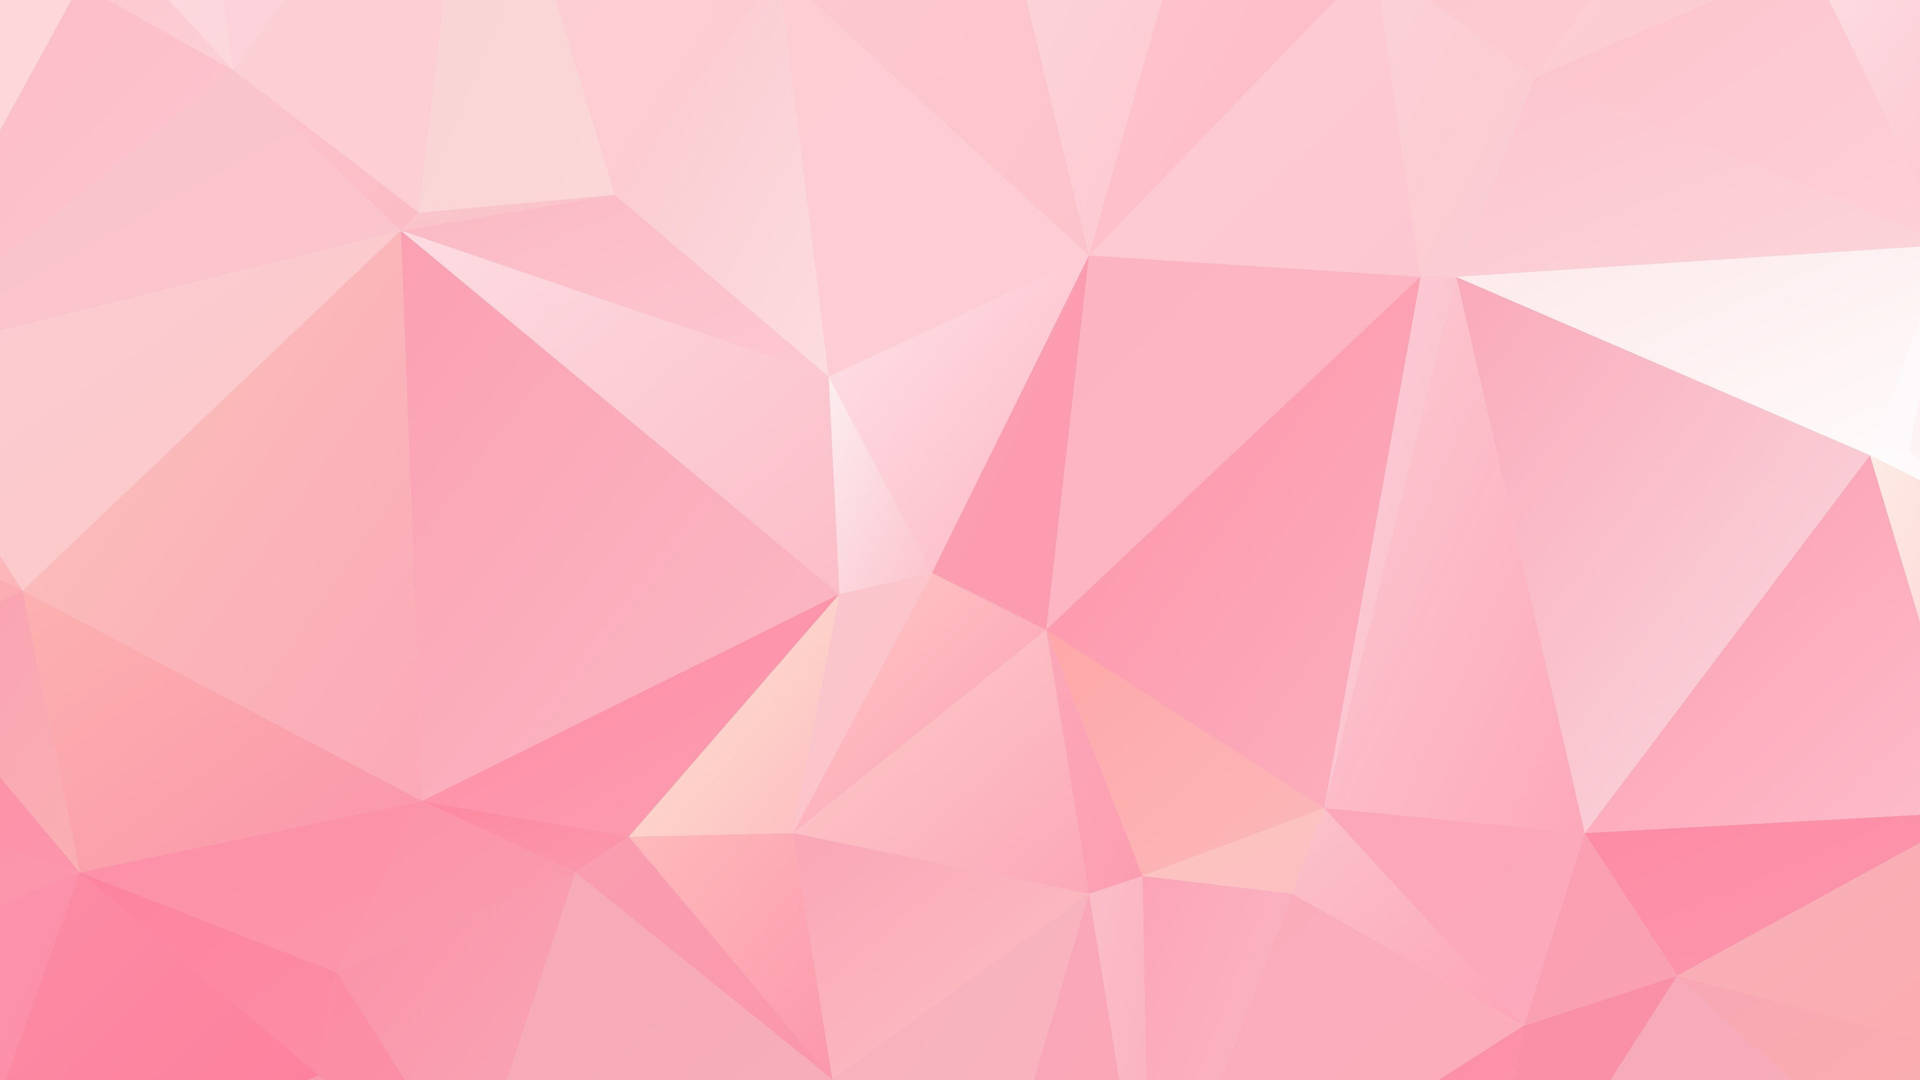 Pink Aesthetic Geometric Shapes Full 4k